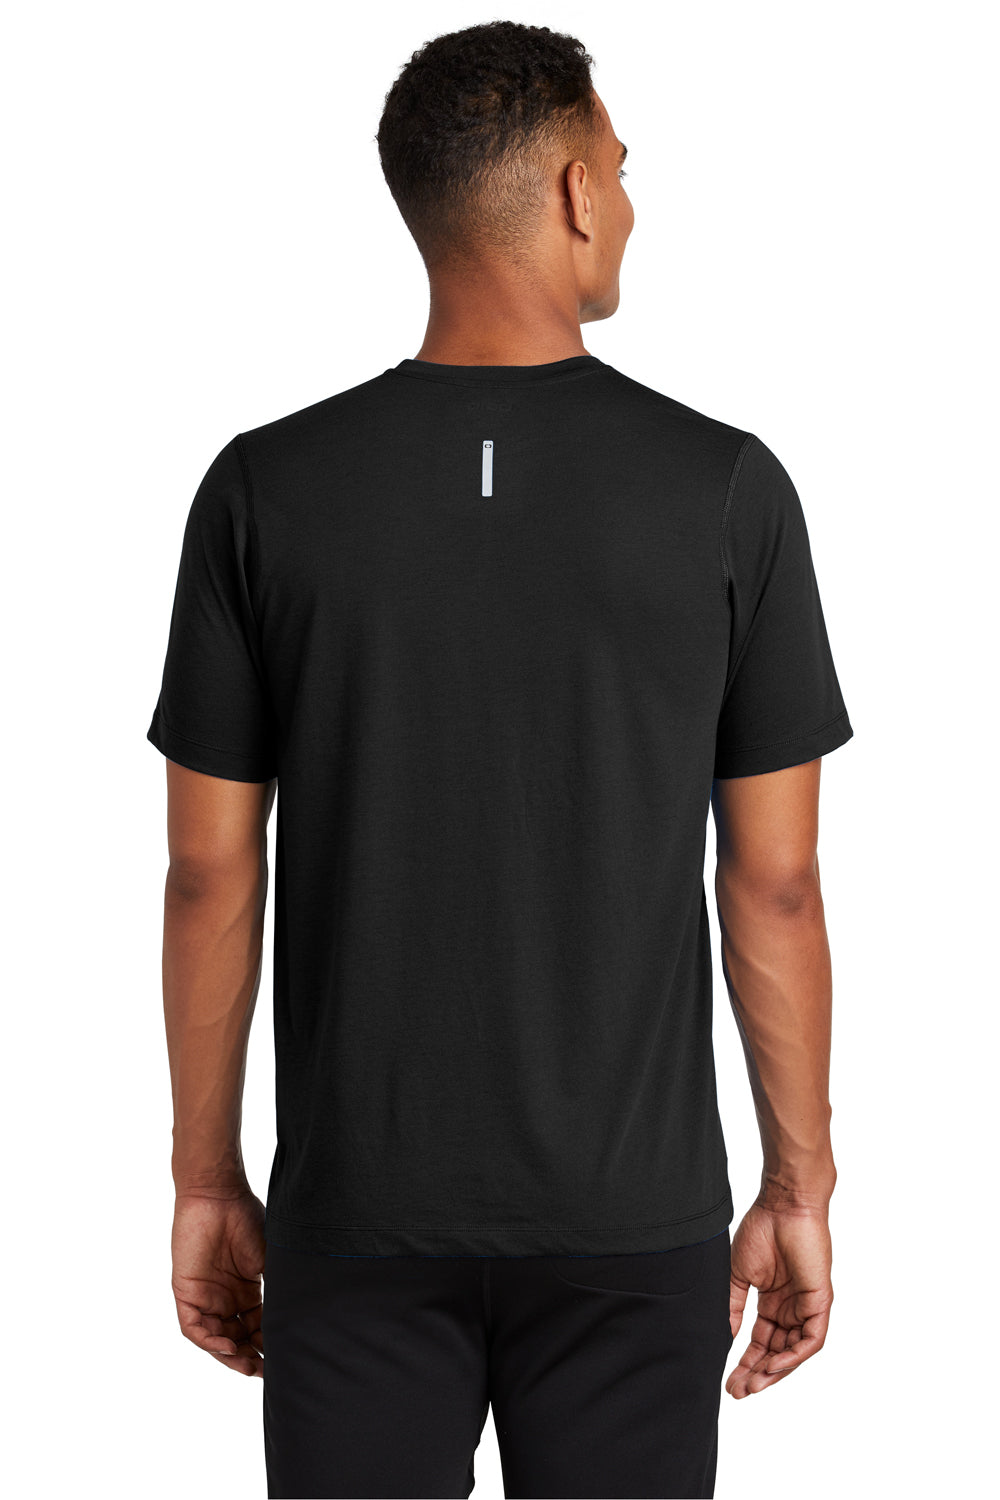 Ogio OE336 Mens Endurance Peak Jersey Moisture Wicking Short Sleeve Crewneck T-Shirt Black Back